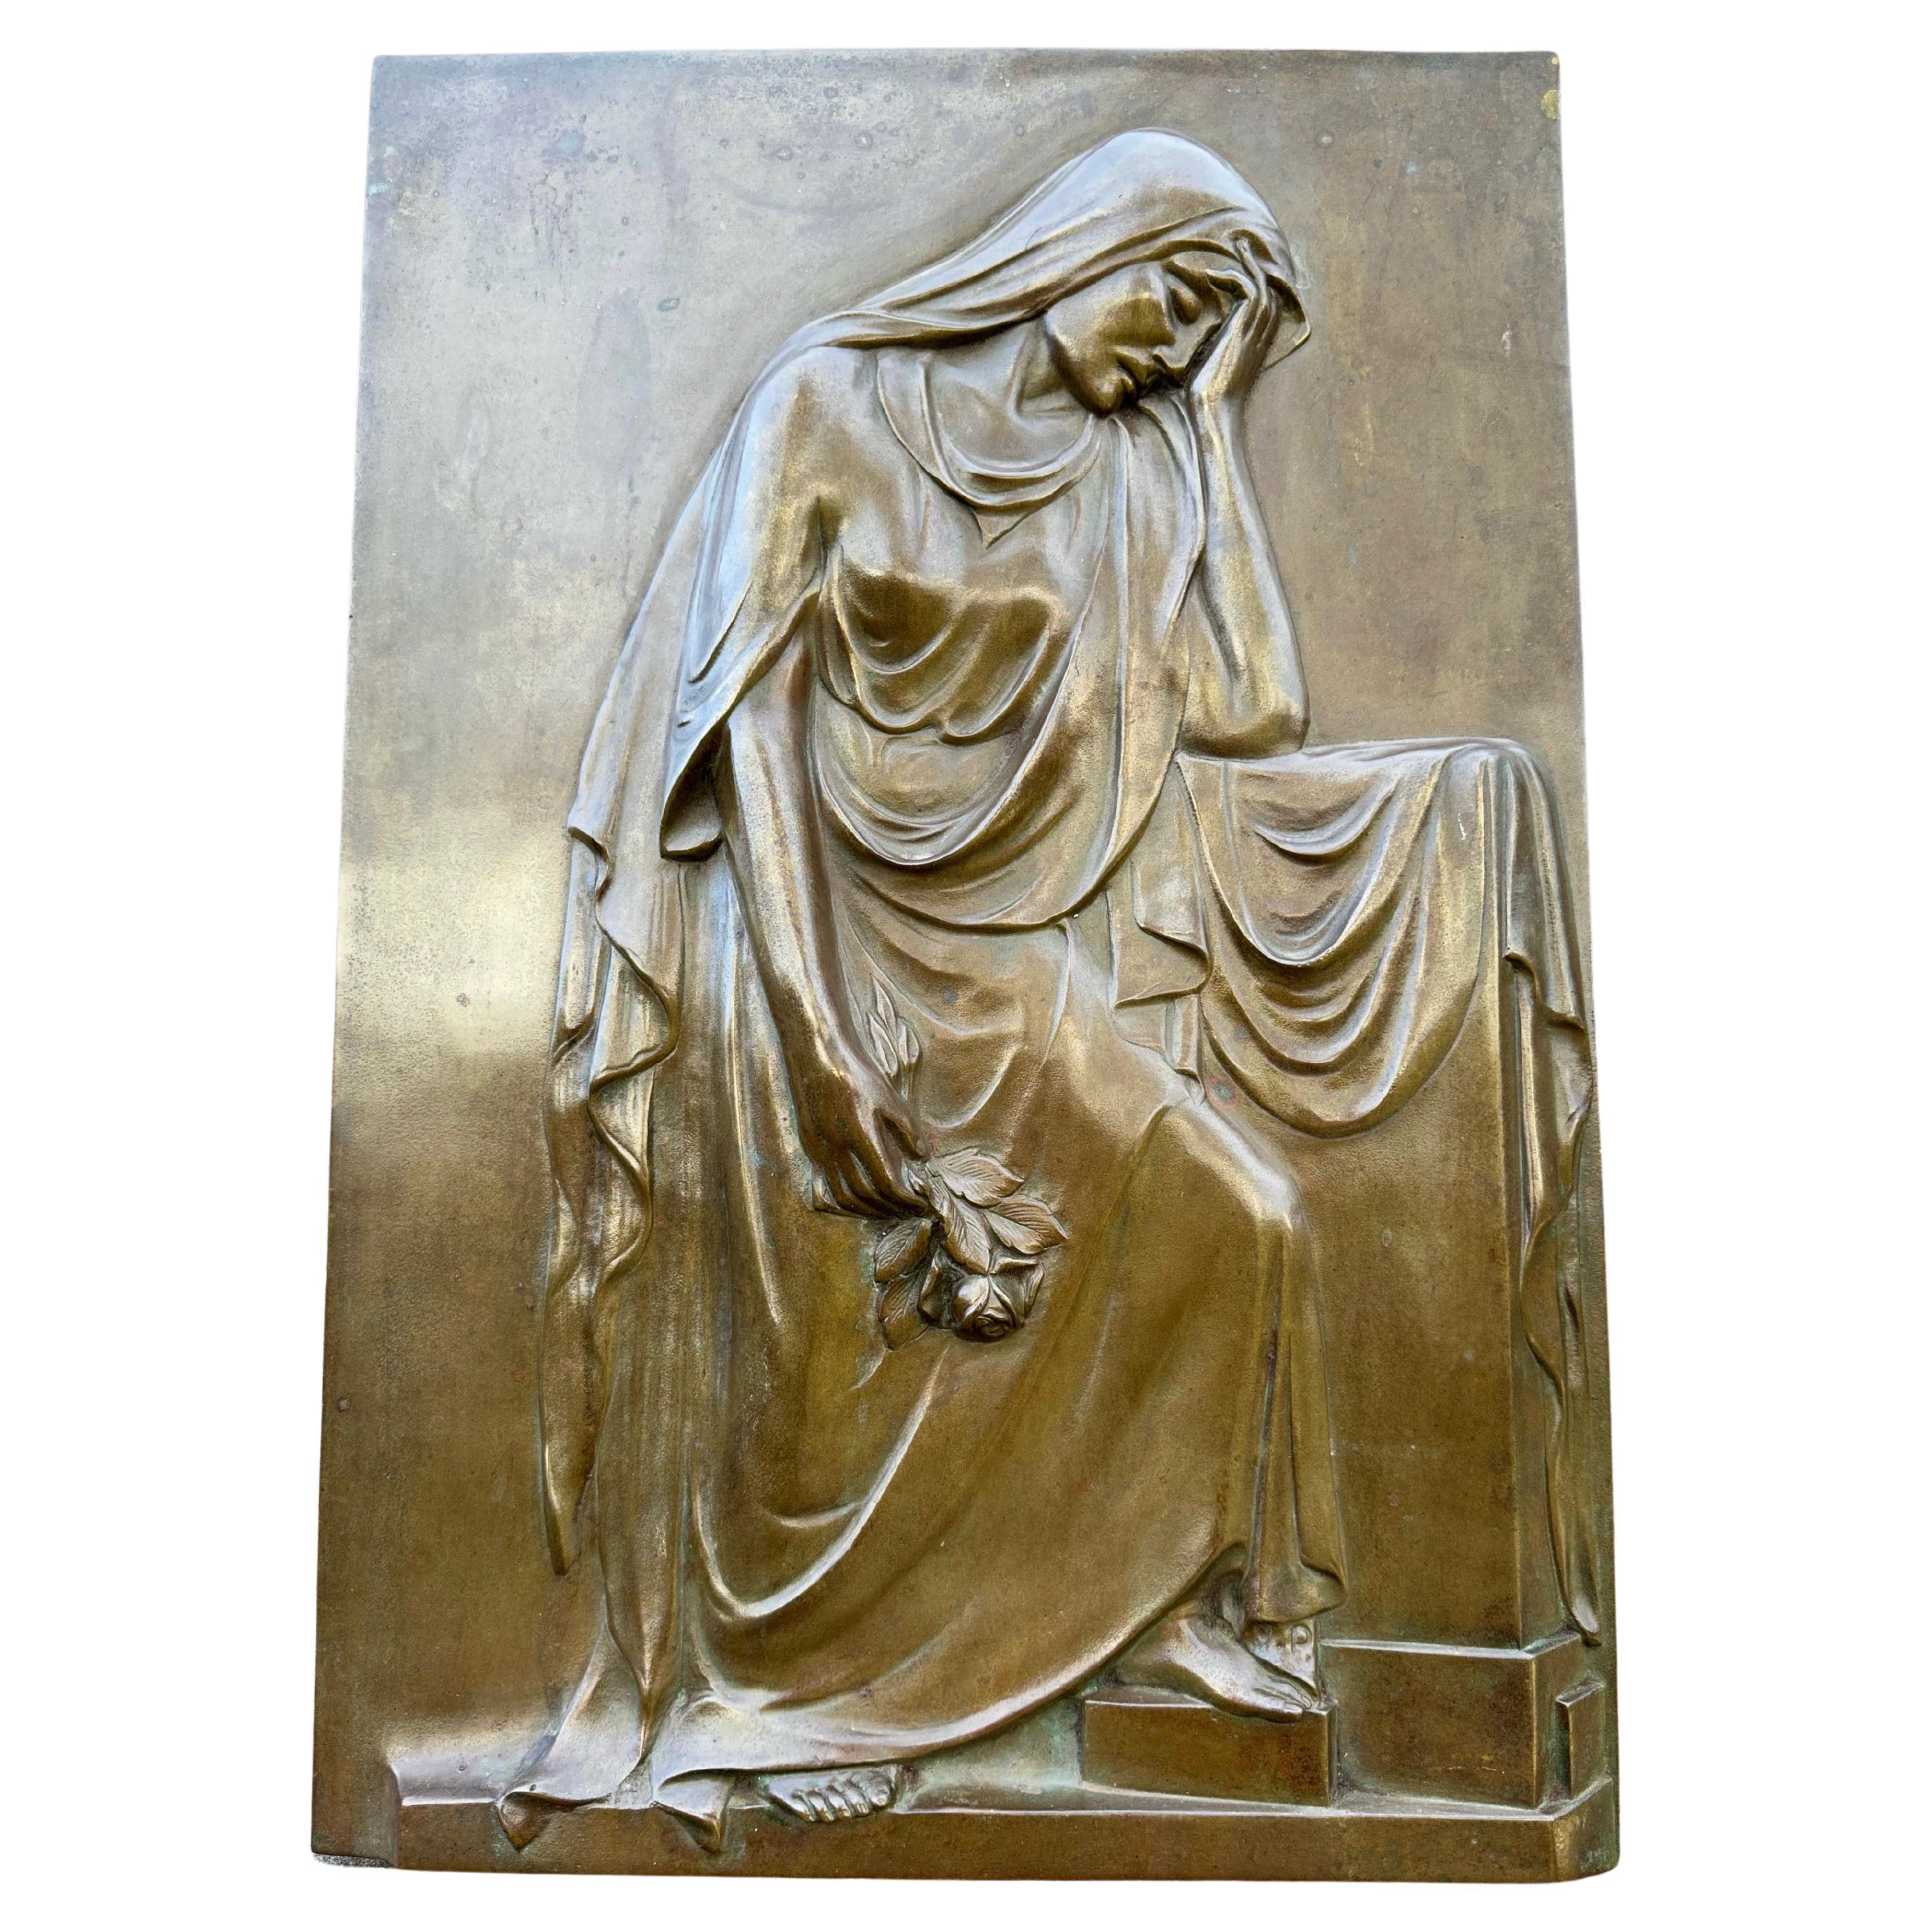 Grande sculpture murale ancienne Jugendstil en bronze massif représentant une femme en deuil